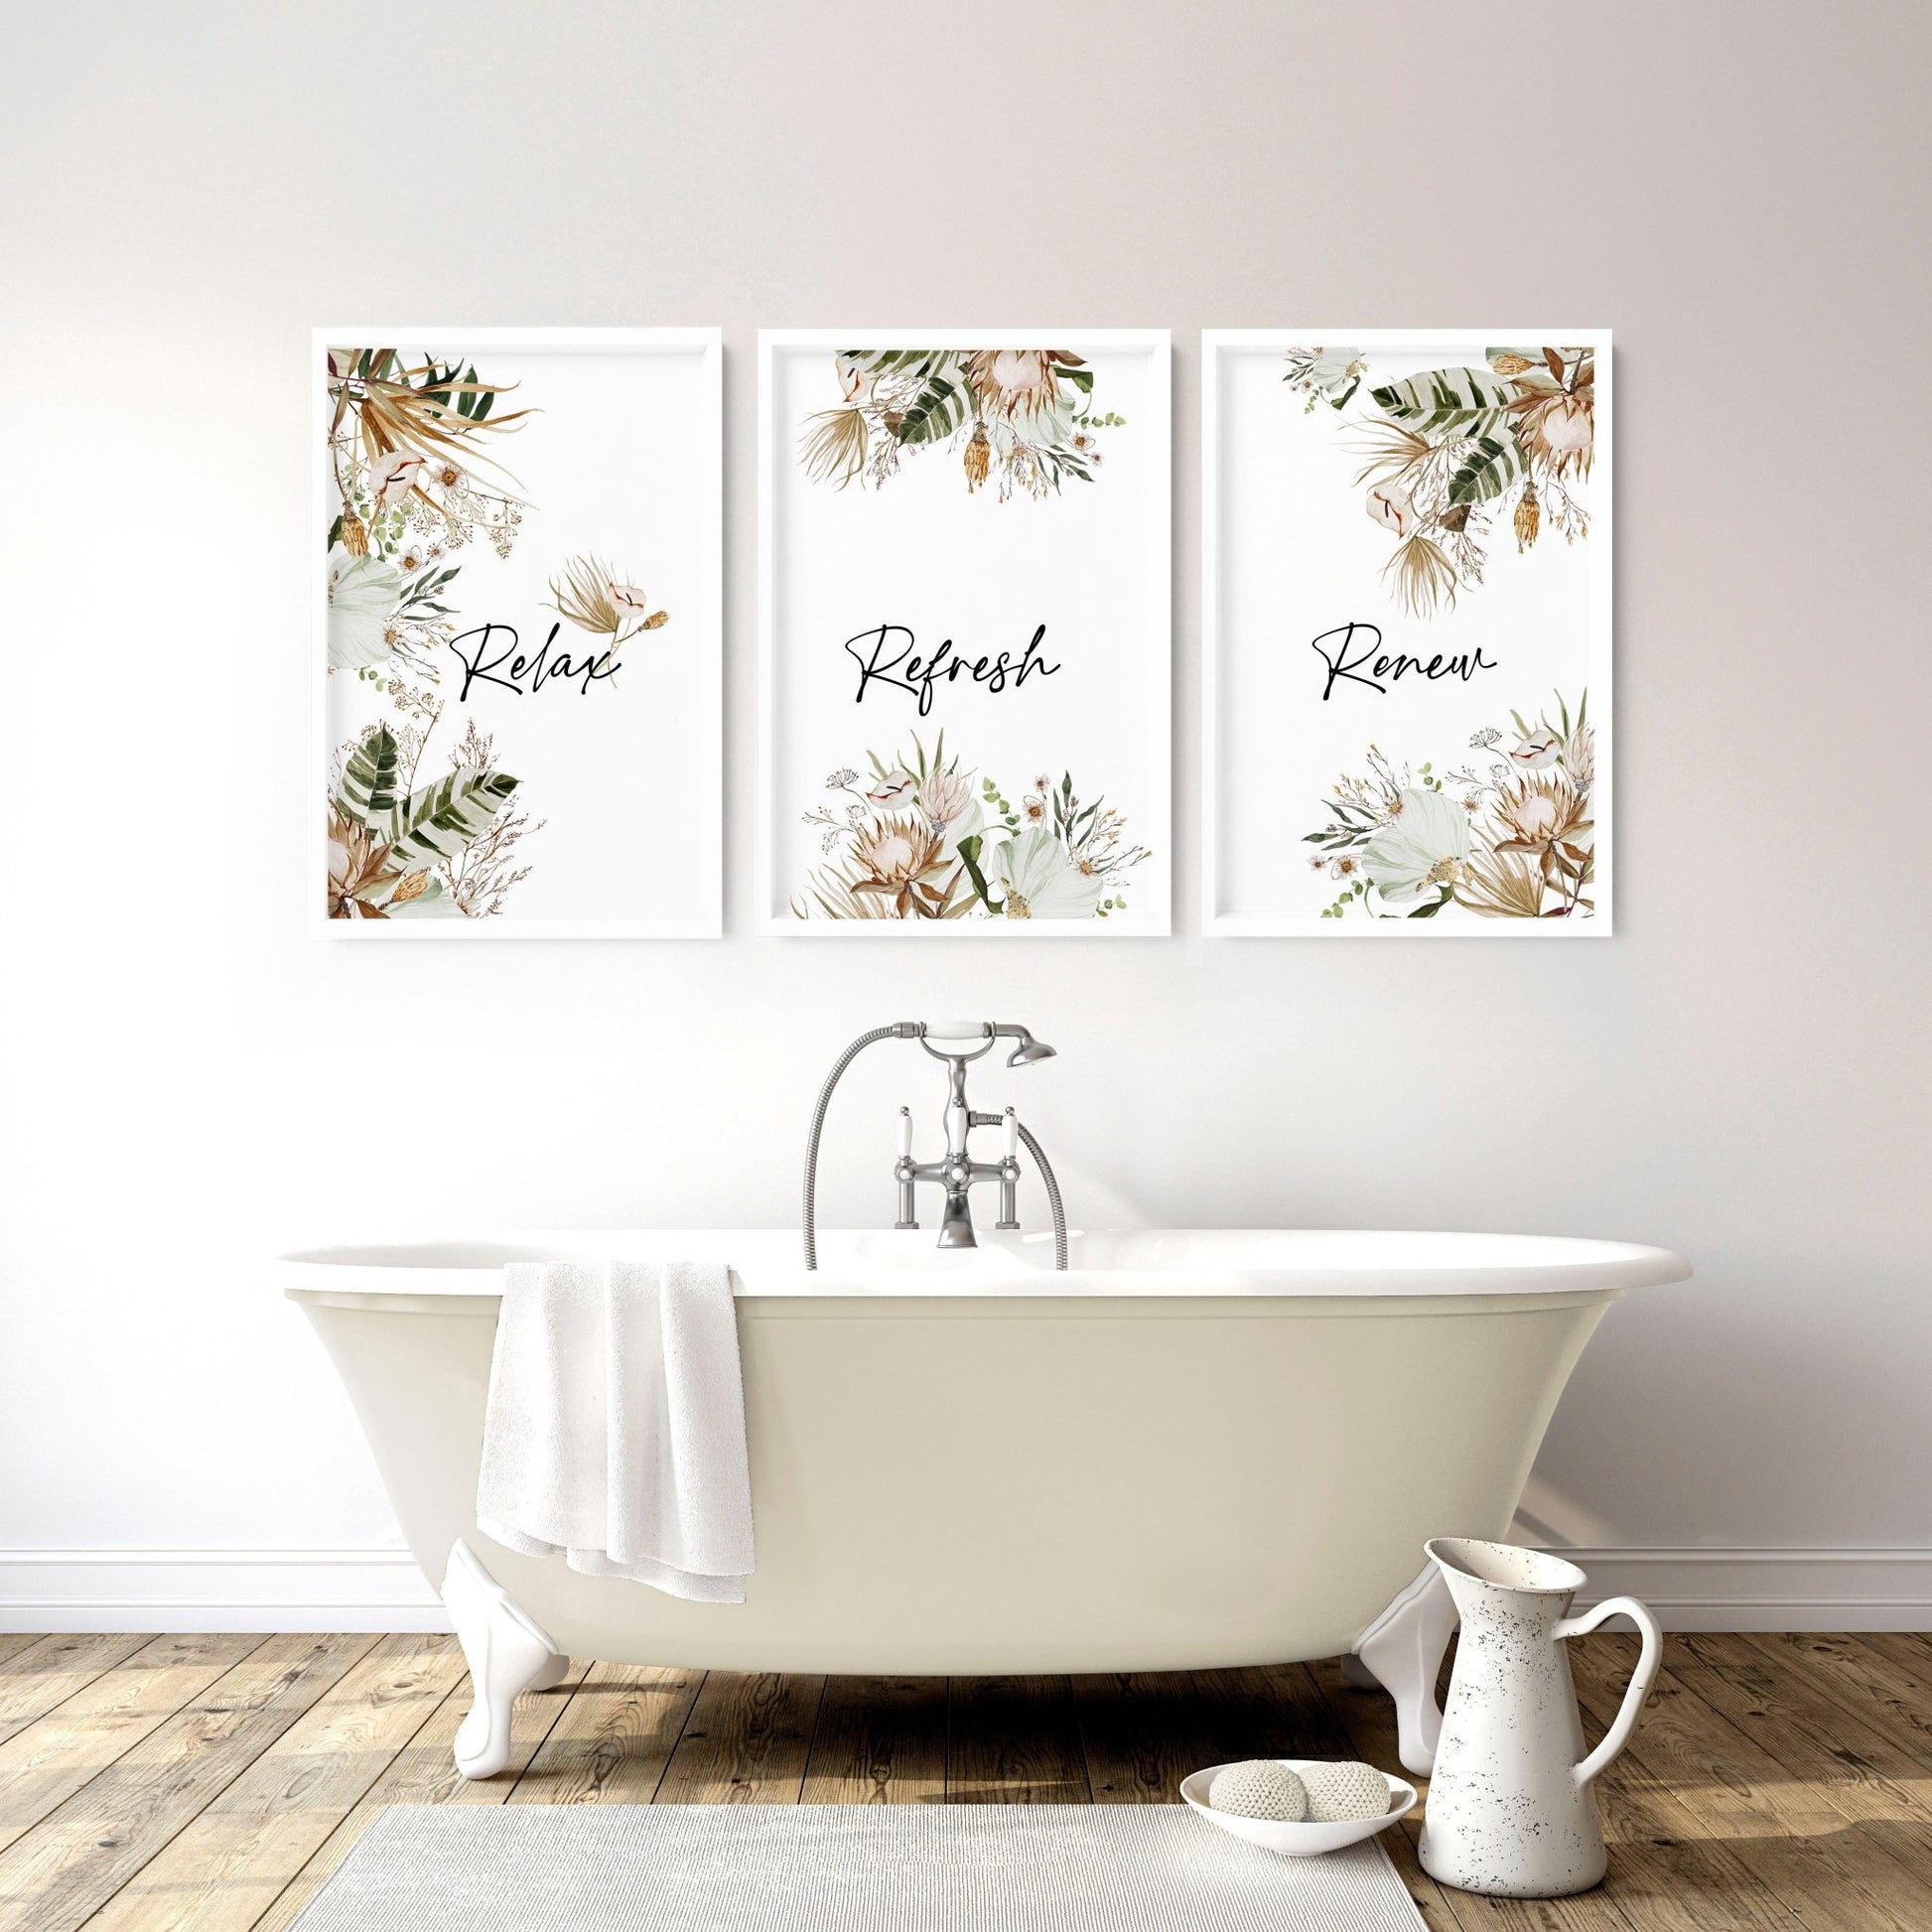 Bohemian Prints for bathroom walls | set of 3 wall art prints - About Wall Art